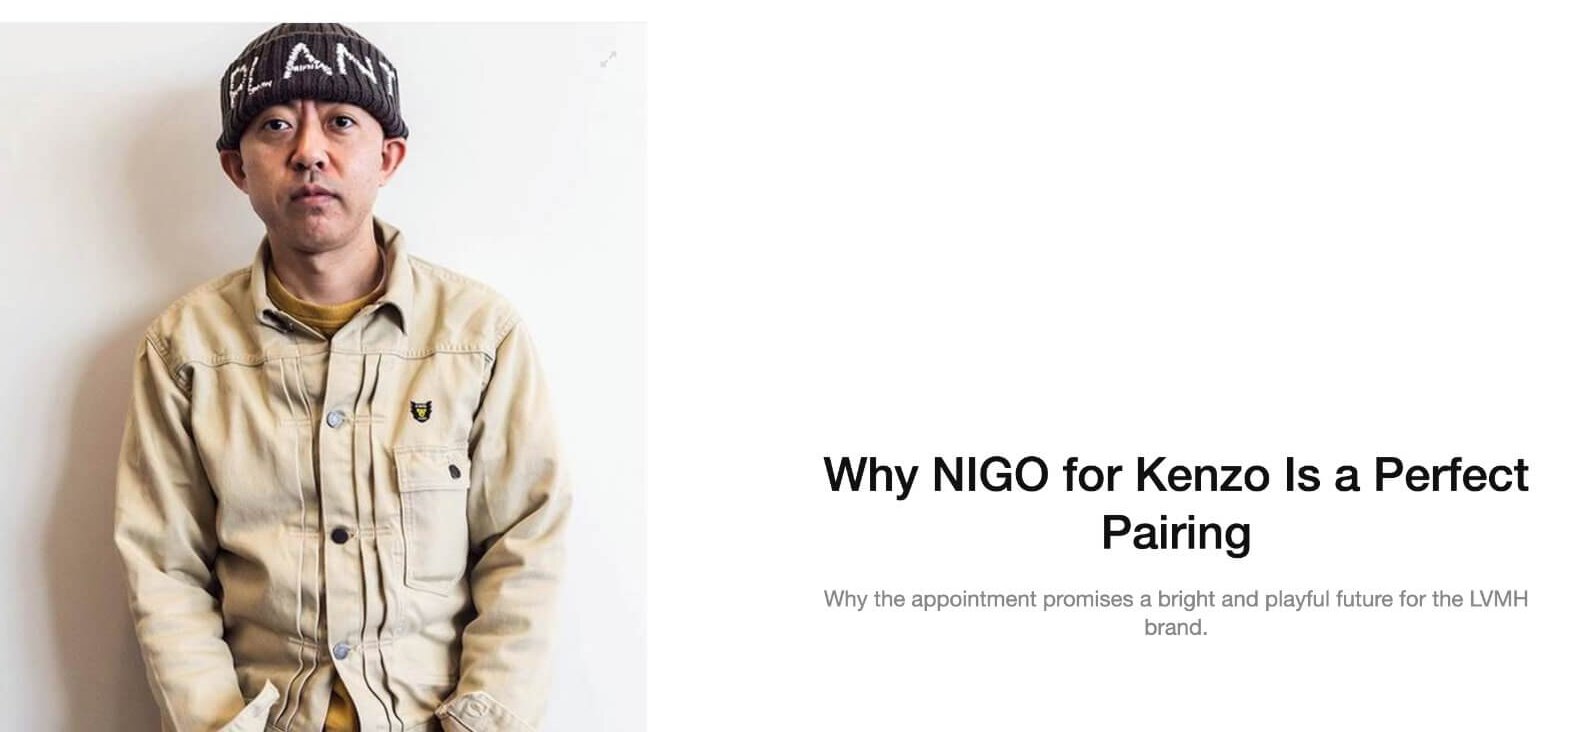 Nigo Is Exactly What KENZO Needs Right Now